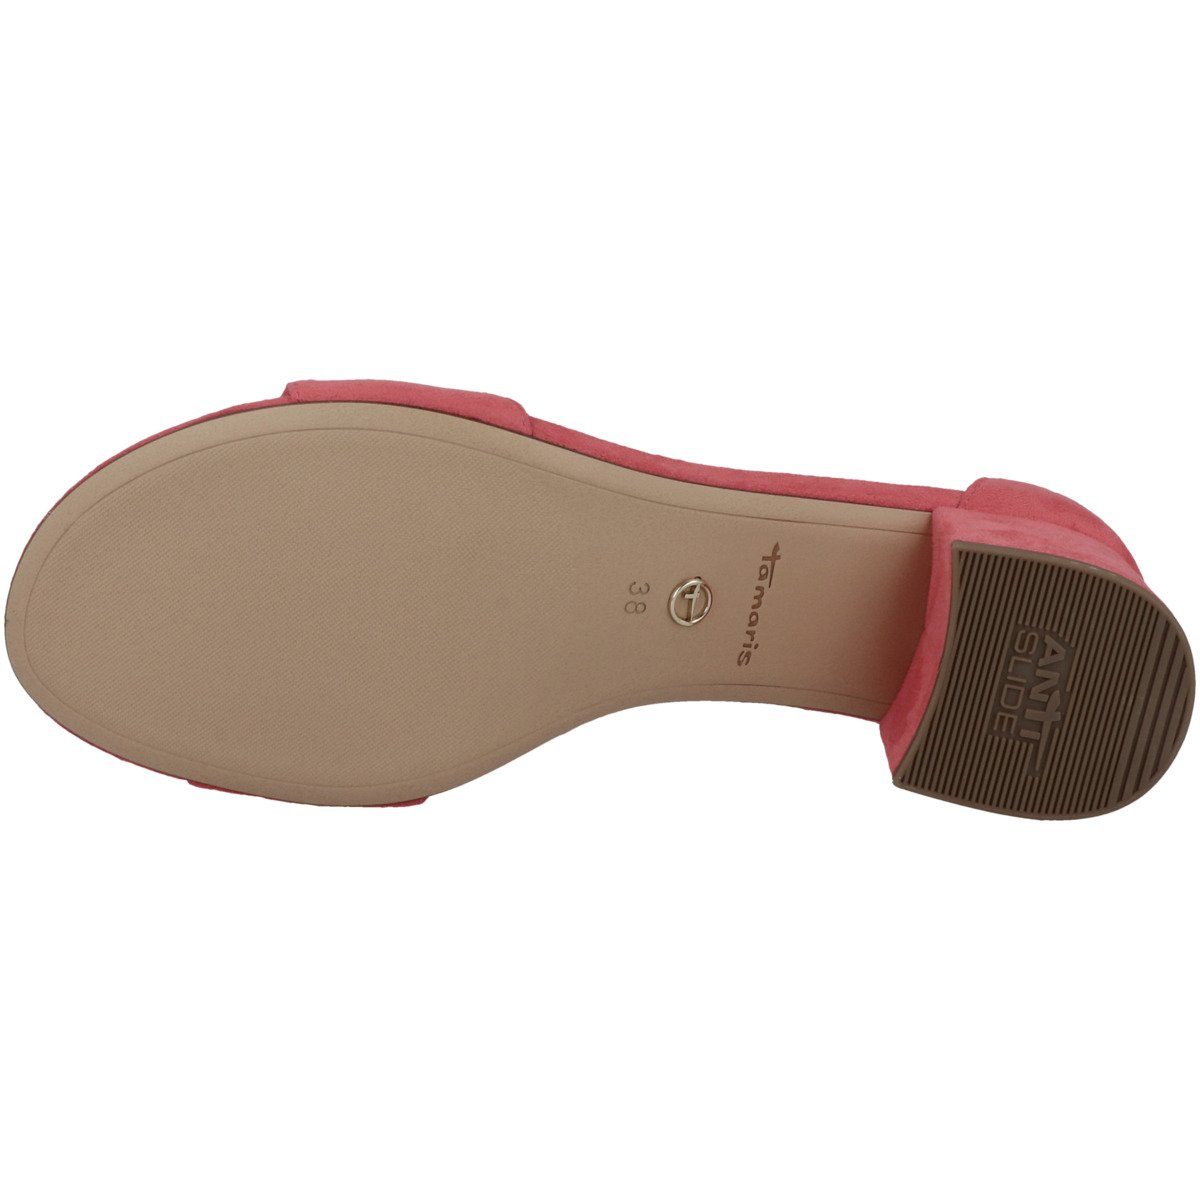 Tamaris 1-28201-20 Damen Merkmale keine Sandalette besonderen pink